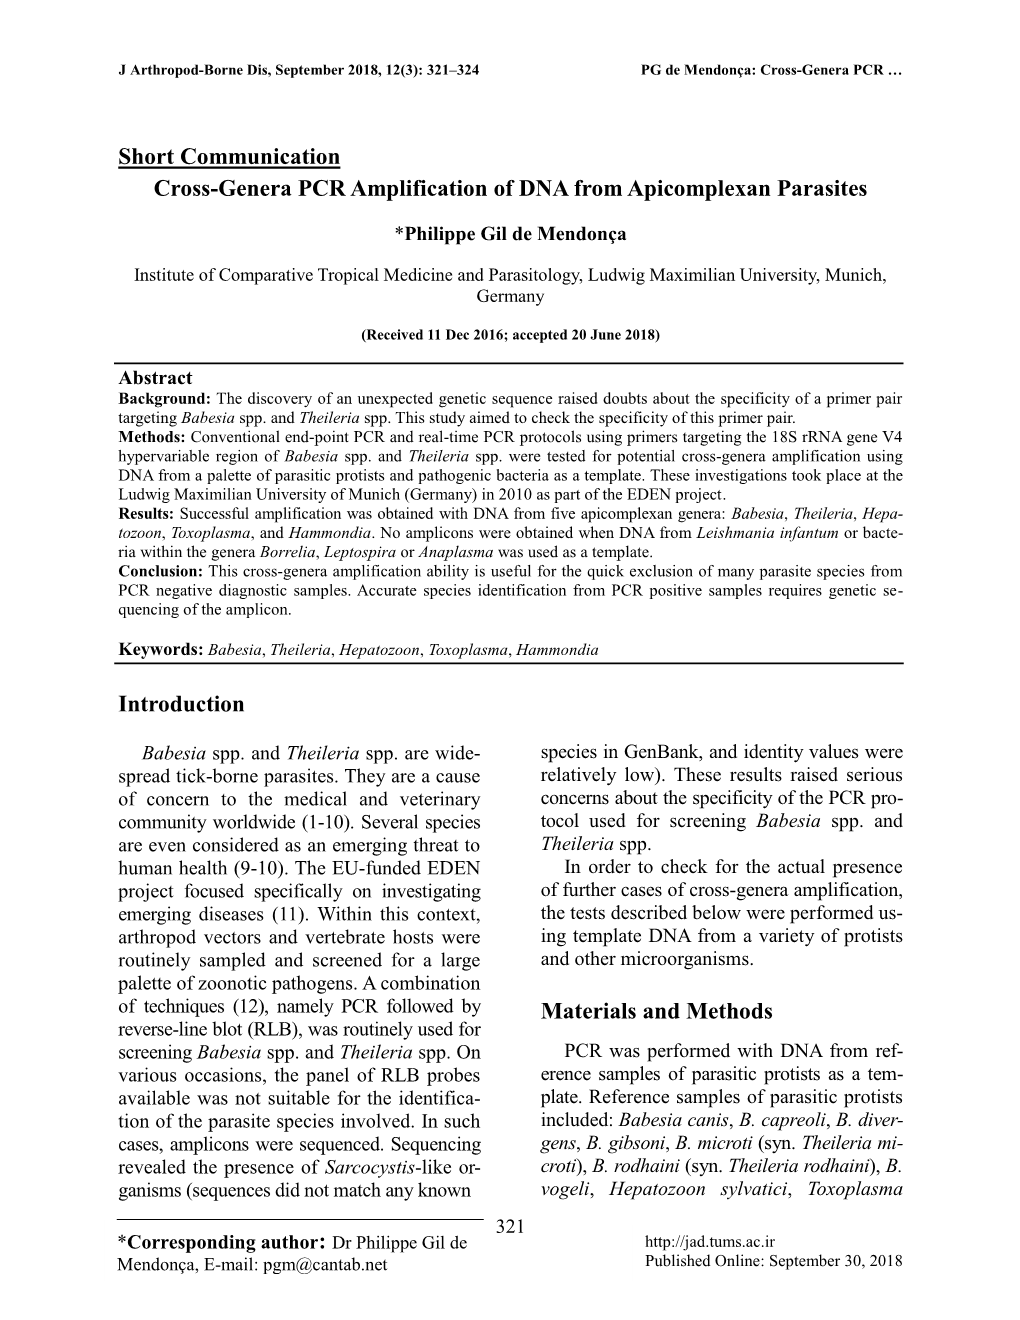 Short Communication Cross-Genera PCR Amplification of DNA from Apicomplexan Parasites